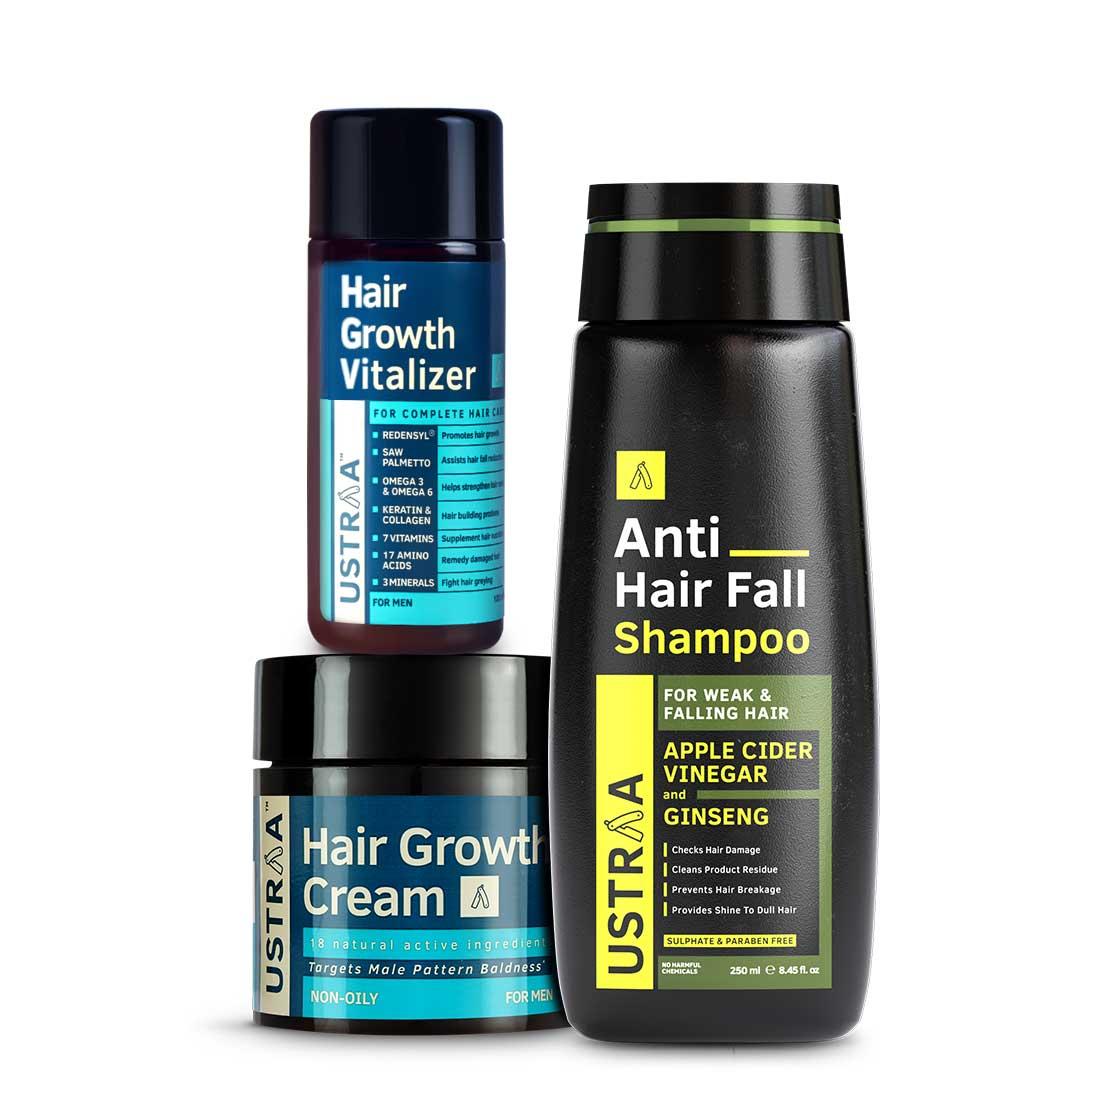 Ustraa Ultimate Hair Growth Kit for Men (Set of 3): Hair Growth Vitalizer + Hair Growth Cream + Anti-Hairfall Shampoo